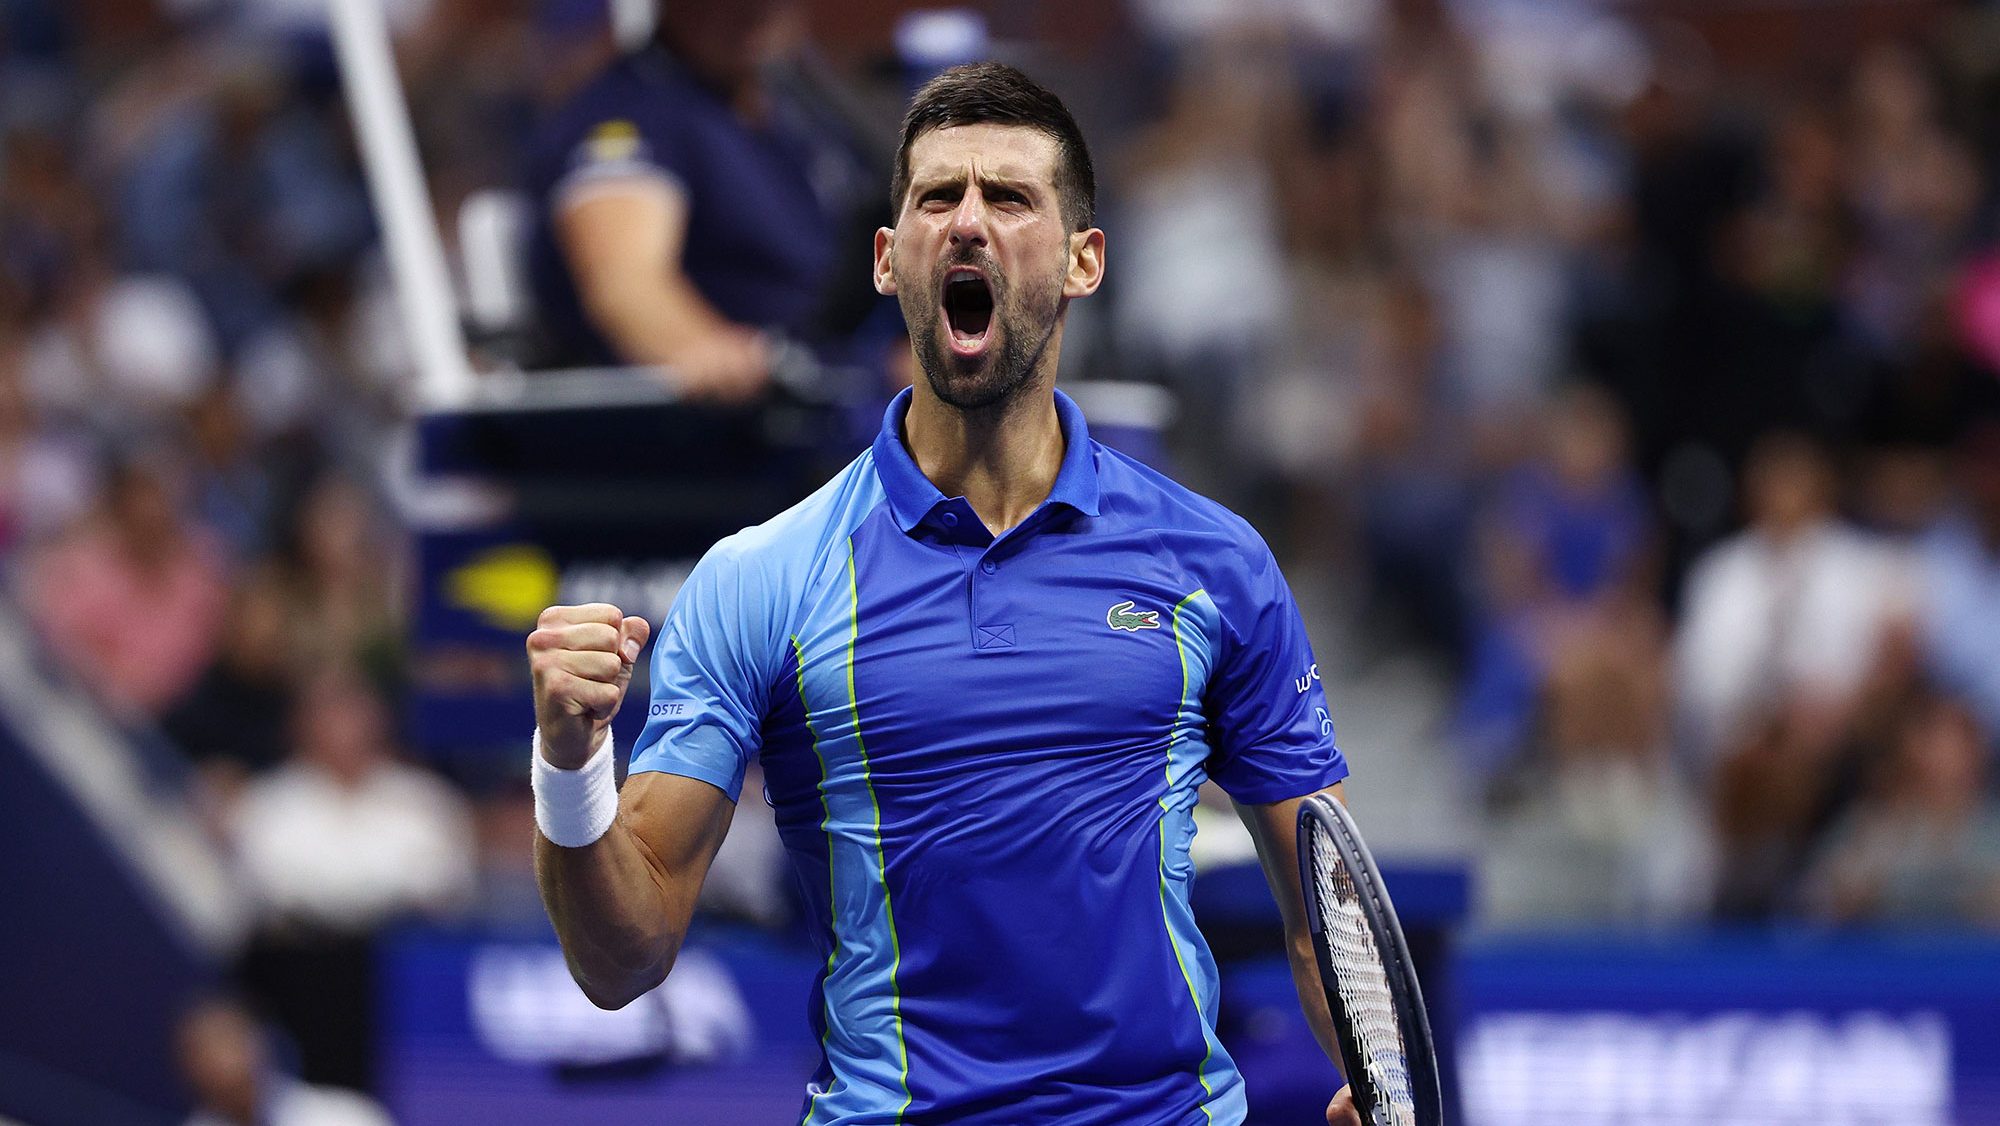 Novak Djokovic beats Daniil Medvedev in three sets and claims a historic 24th Grand Slam title